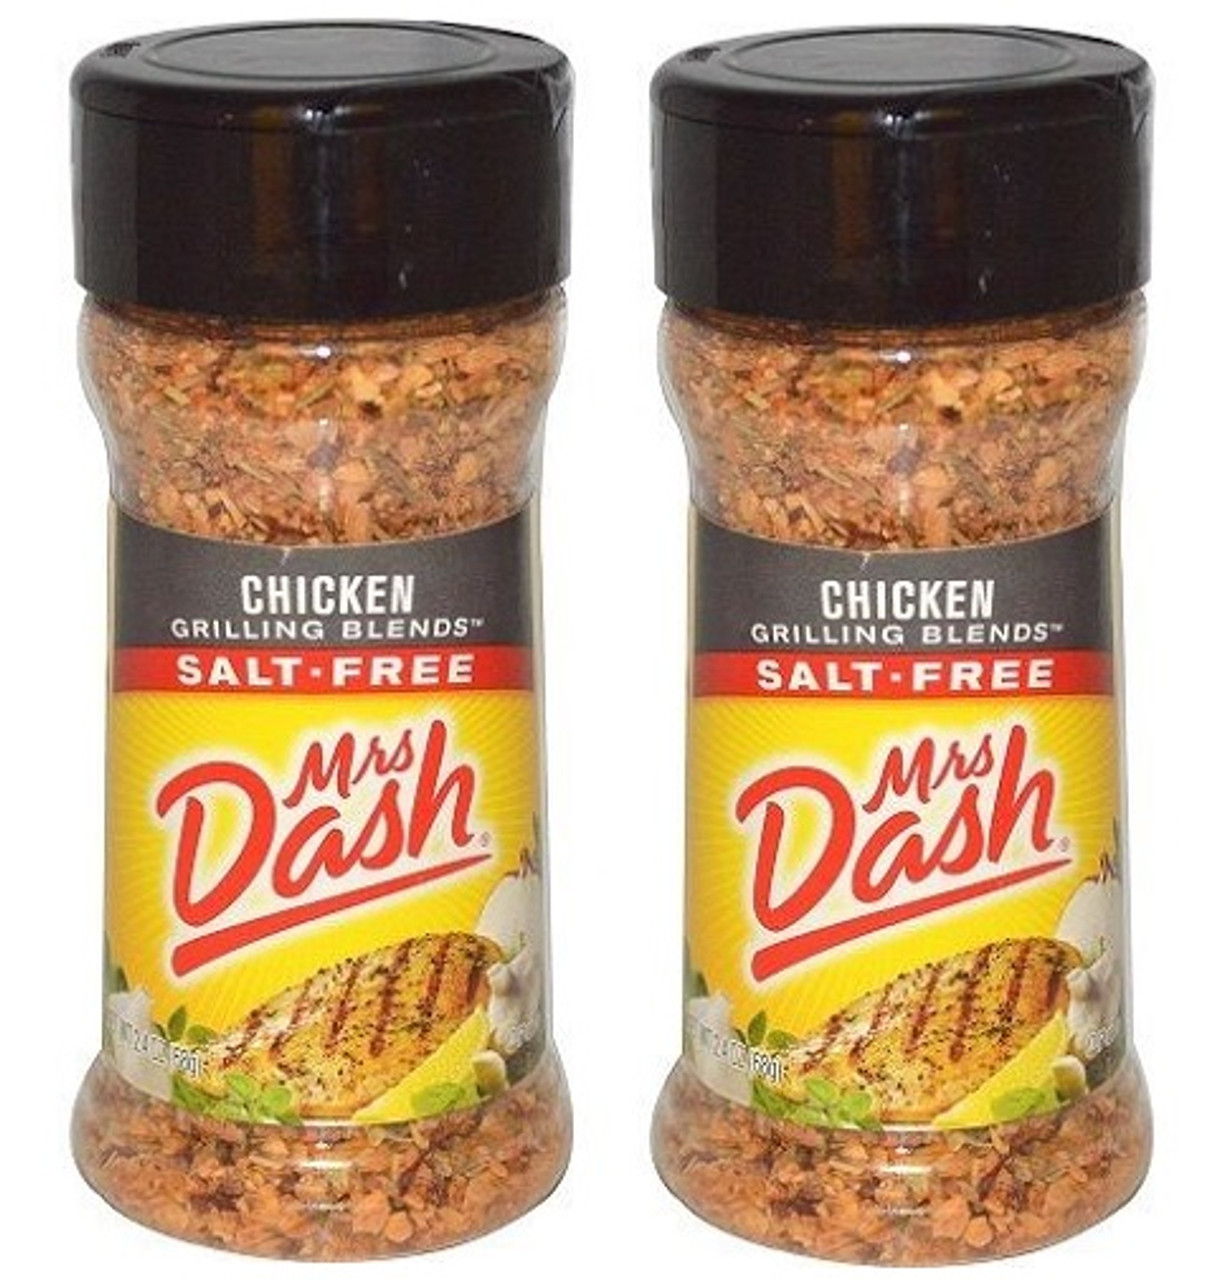 Mrs Dash Original Blend Salt-Free Seasoning Blend 2 Bottle Pack